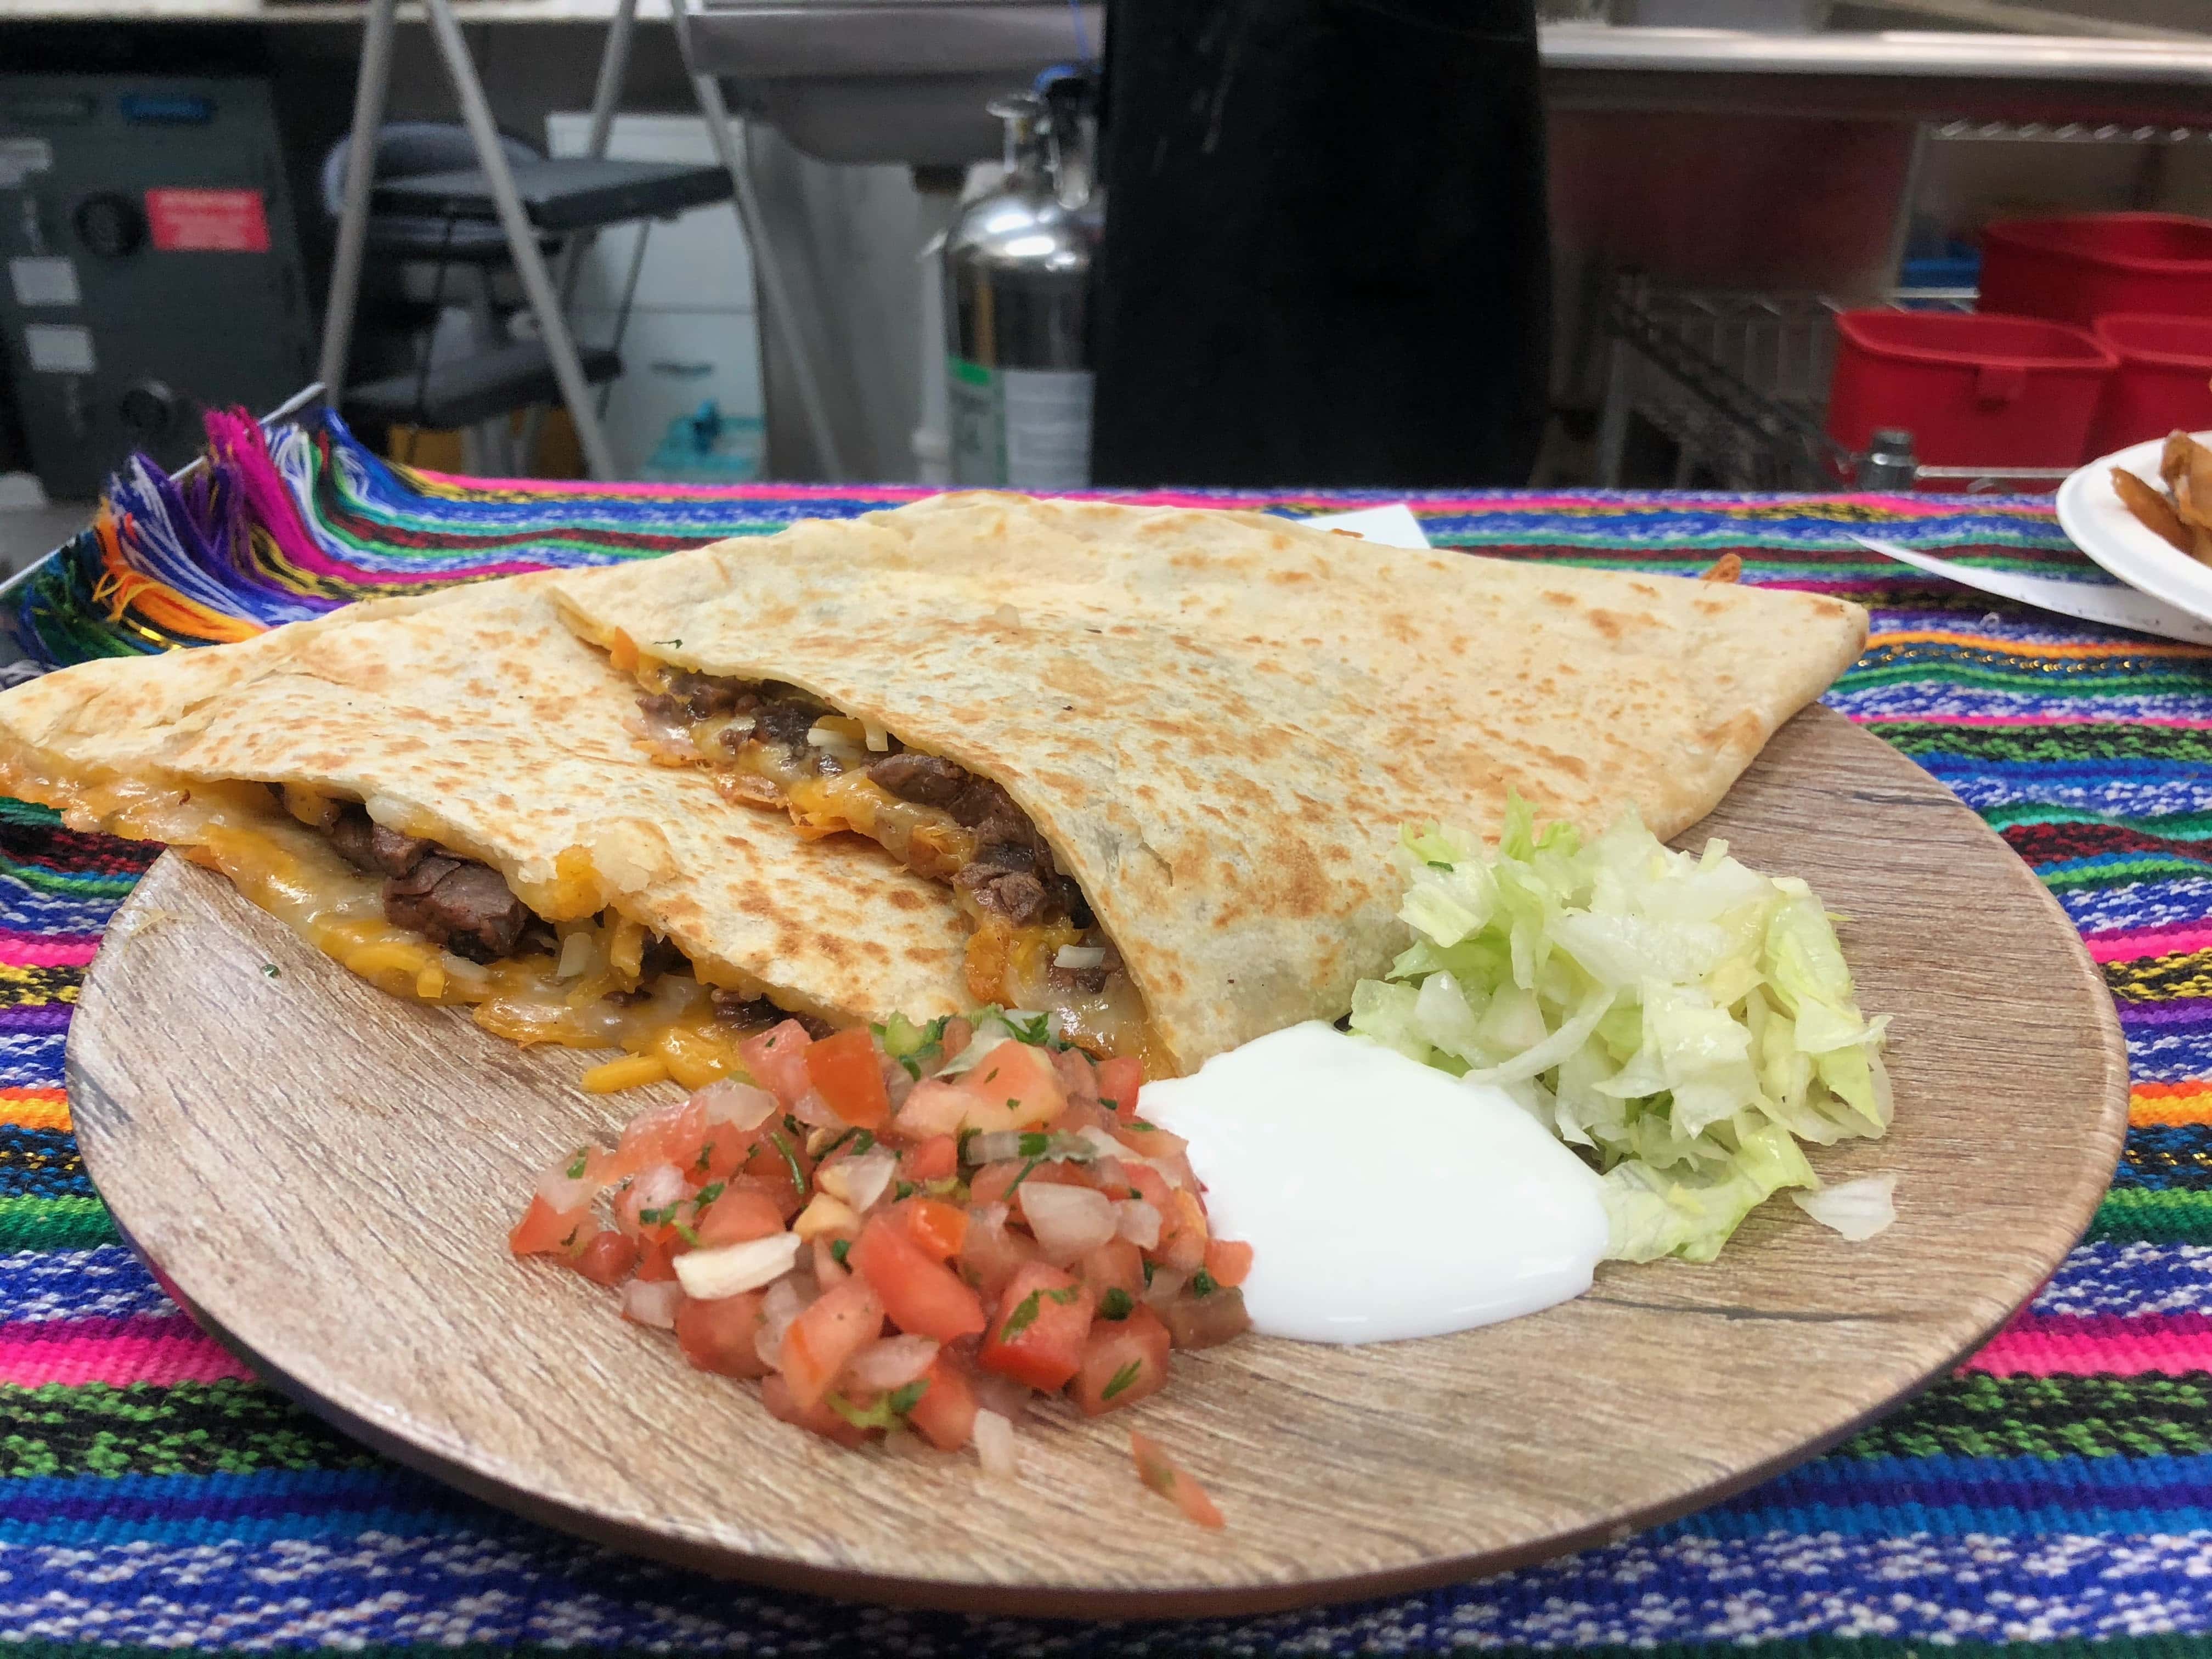 Rebel Tacos - Temecula, CA, US, mexican restaurants near me that deliver